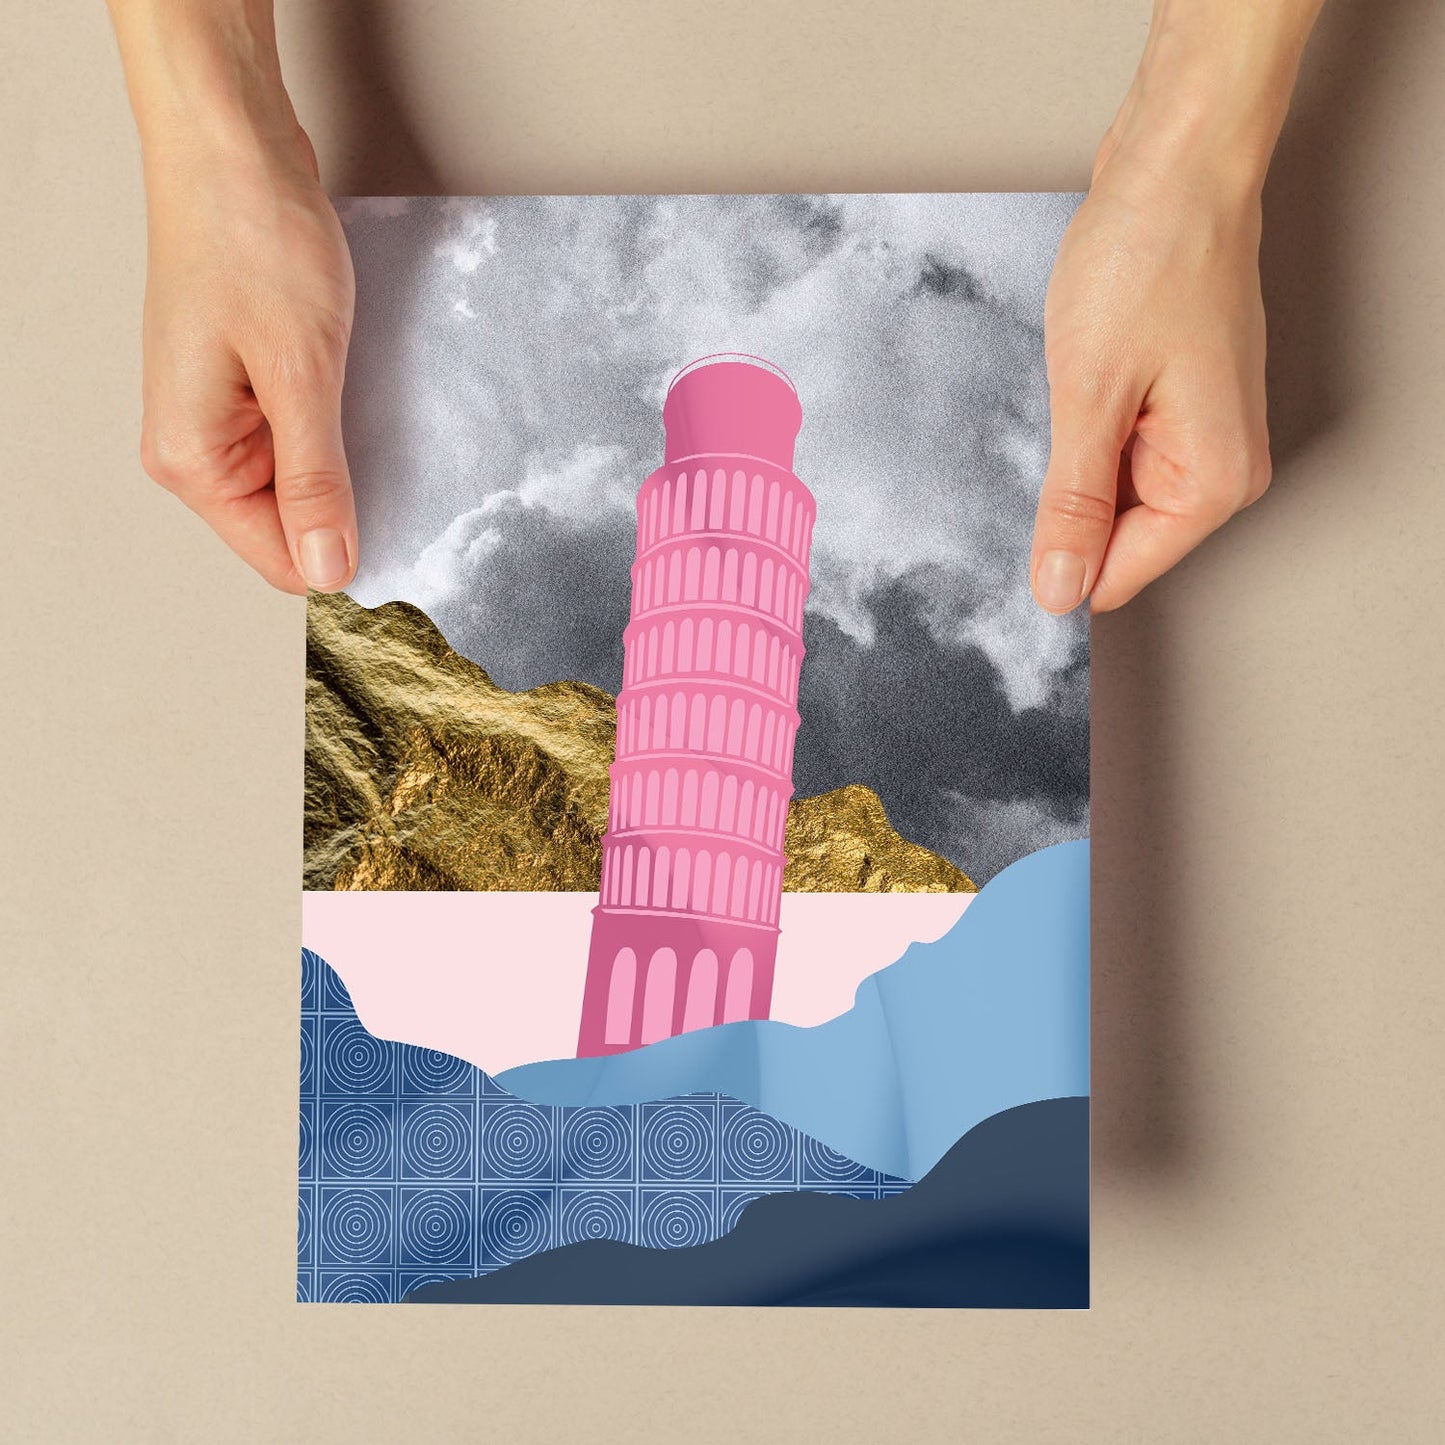 Leaning Tower of Pisa-Artwork-Nacnic-Nacnic Estudio SL